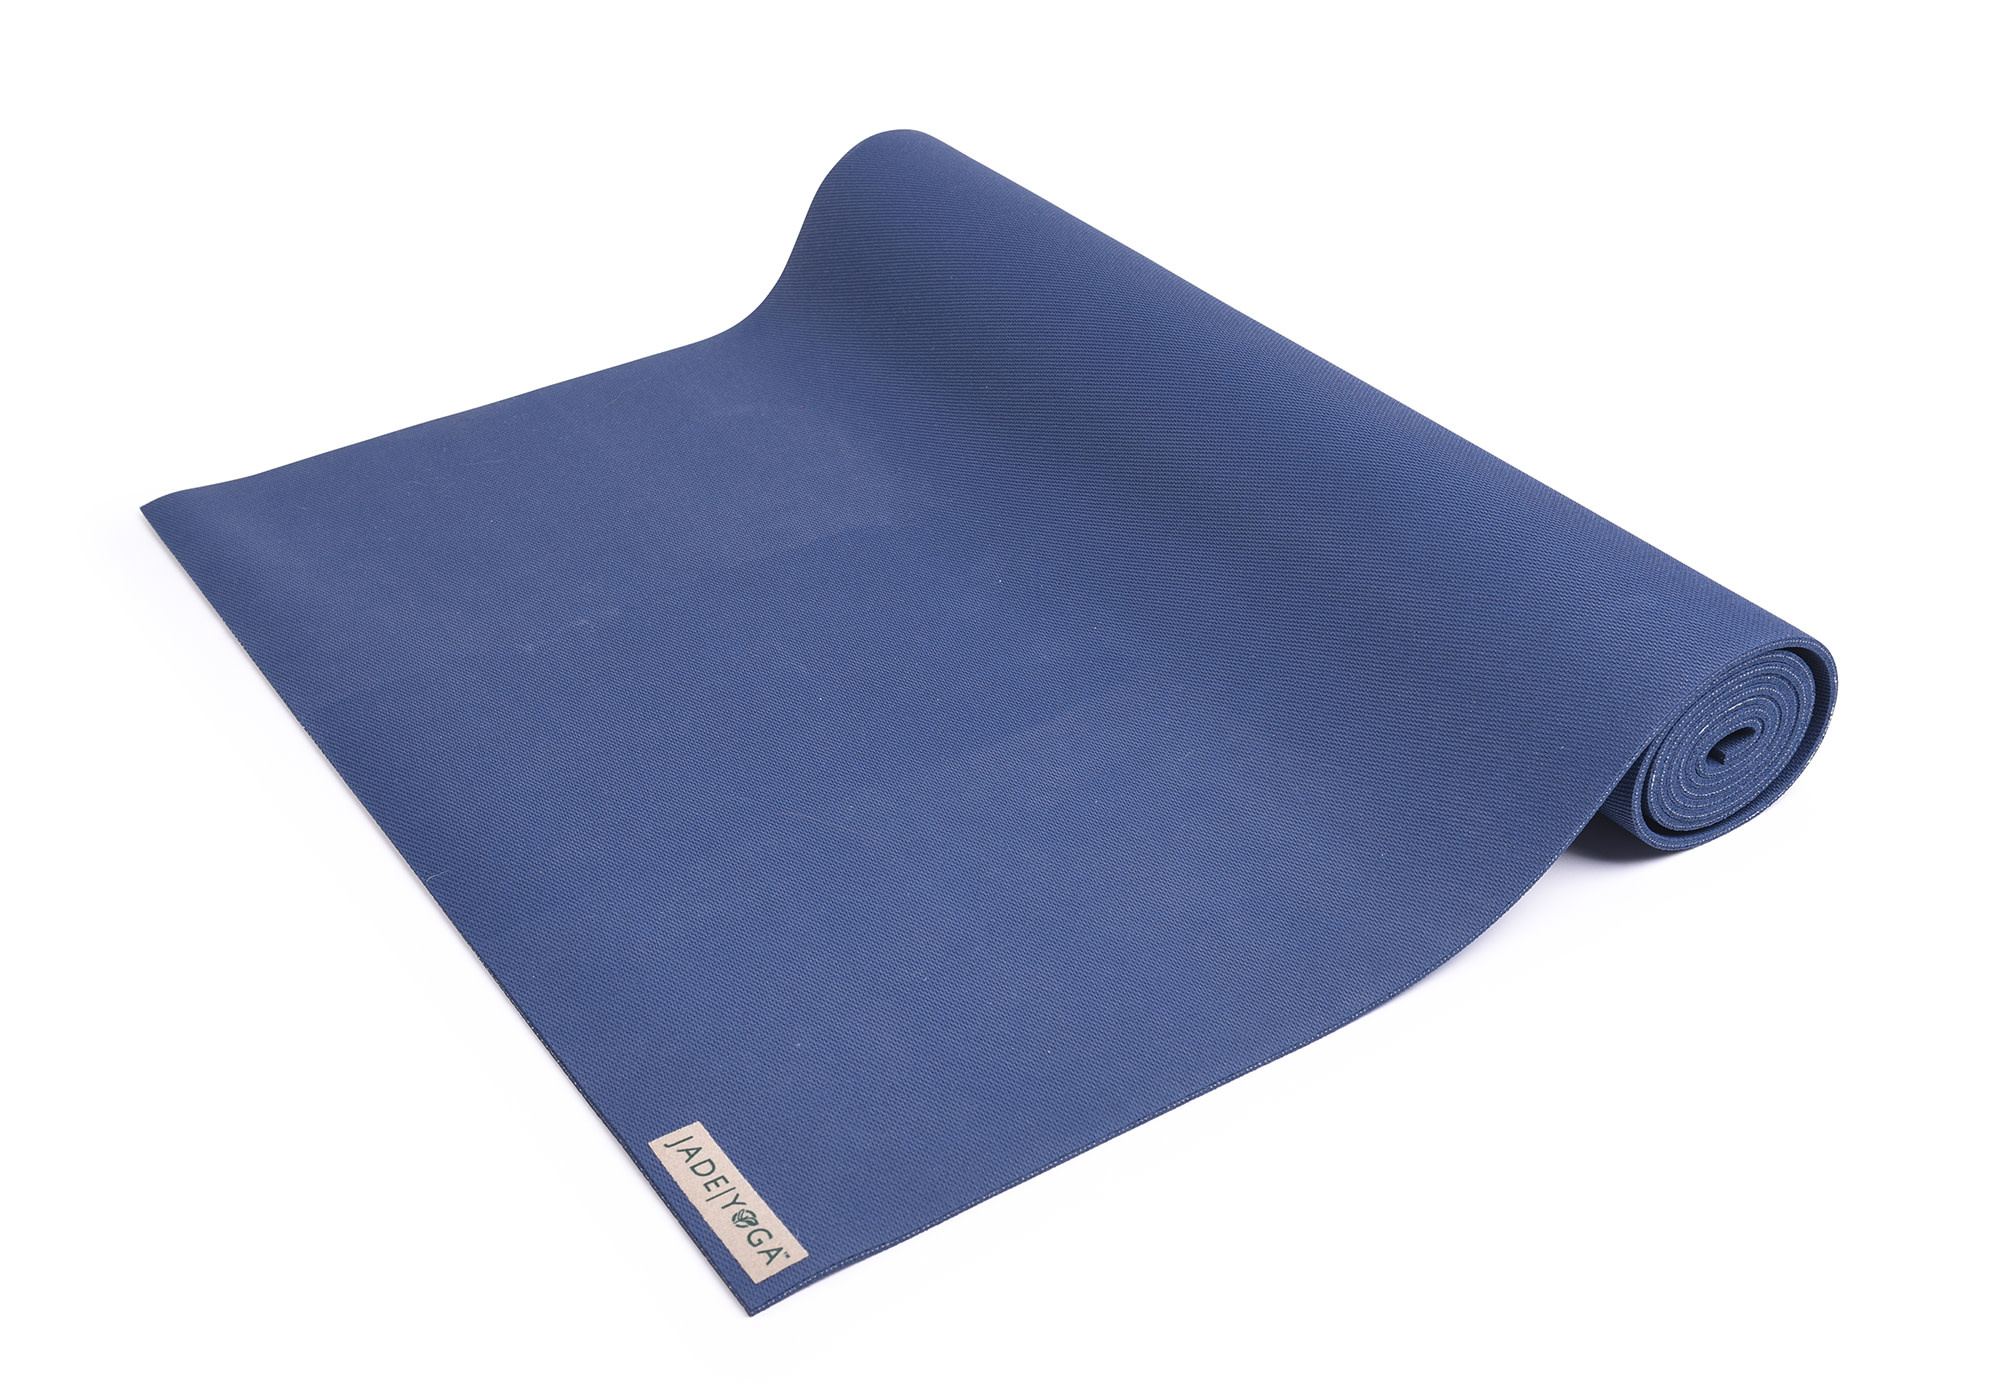 Jade Harmony Yogamat 188cm 60cm 5mm - Midnight Blue-3